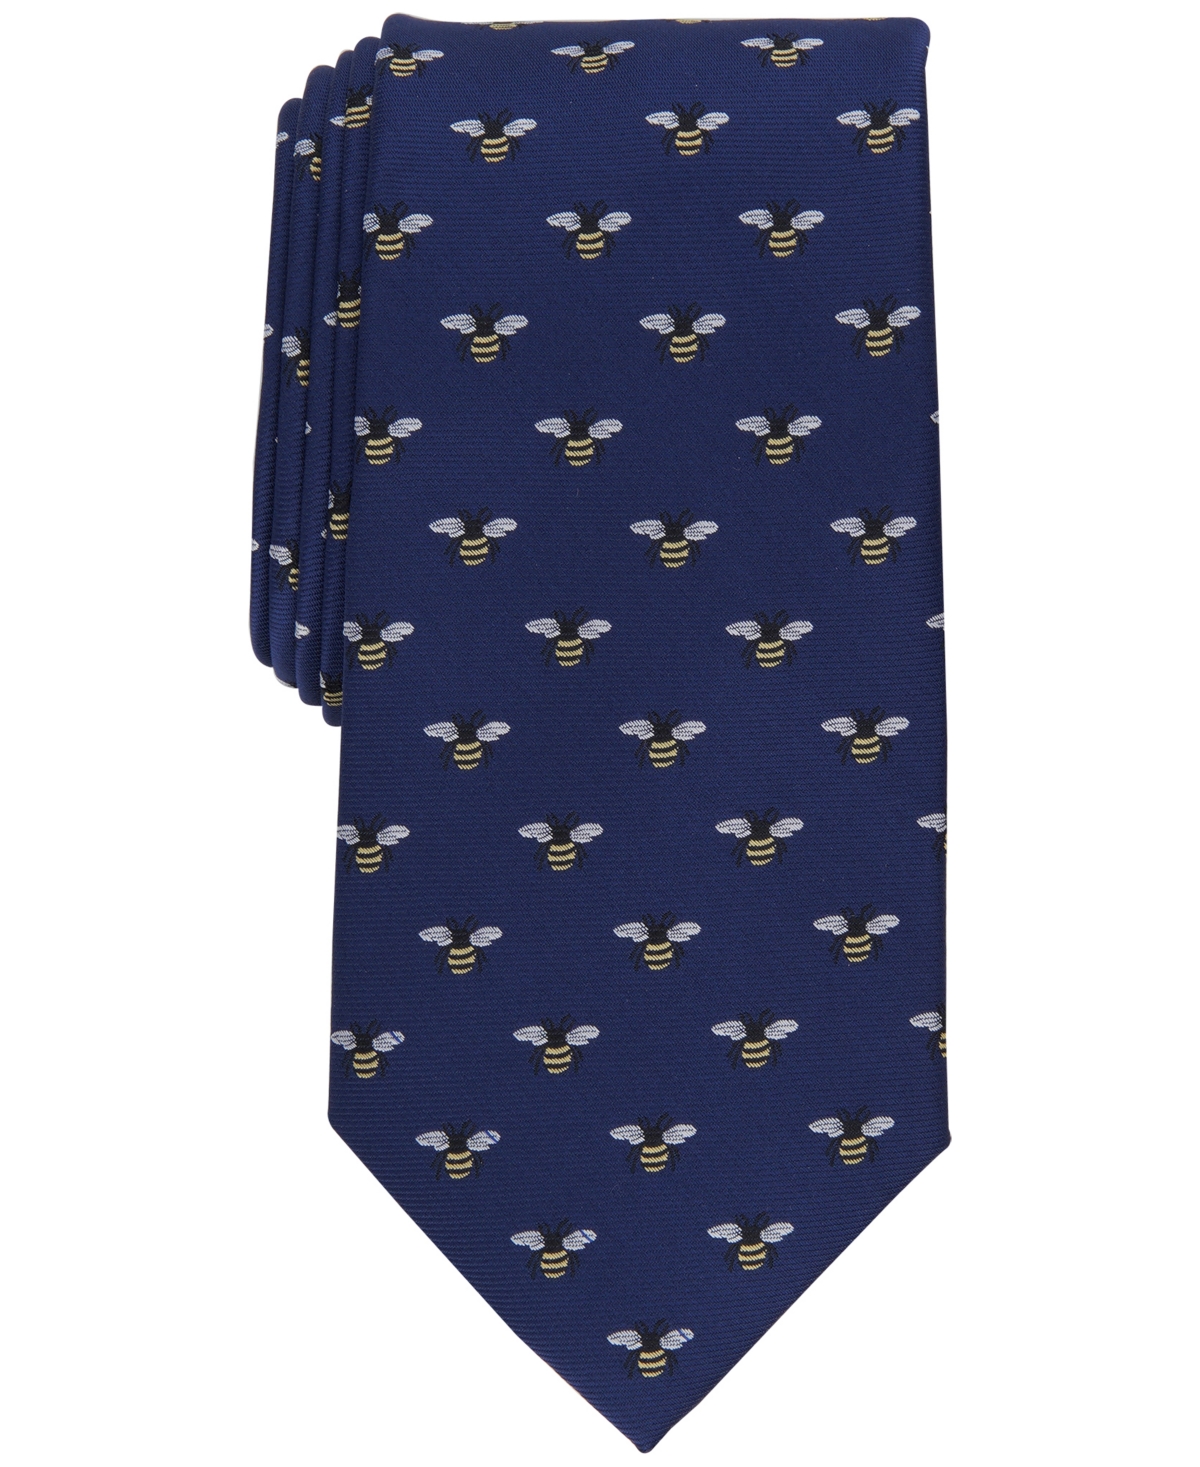 Men's Classic Bee Neat Tie, Created for Macy's - Navy